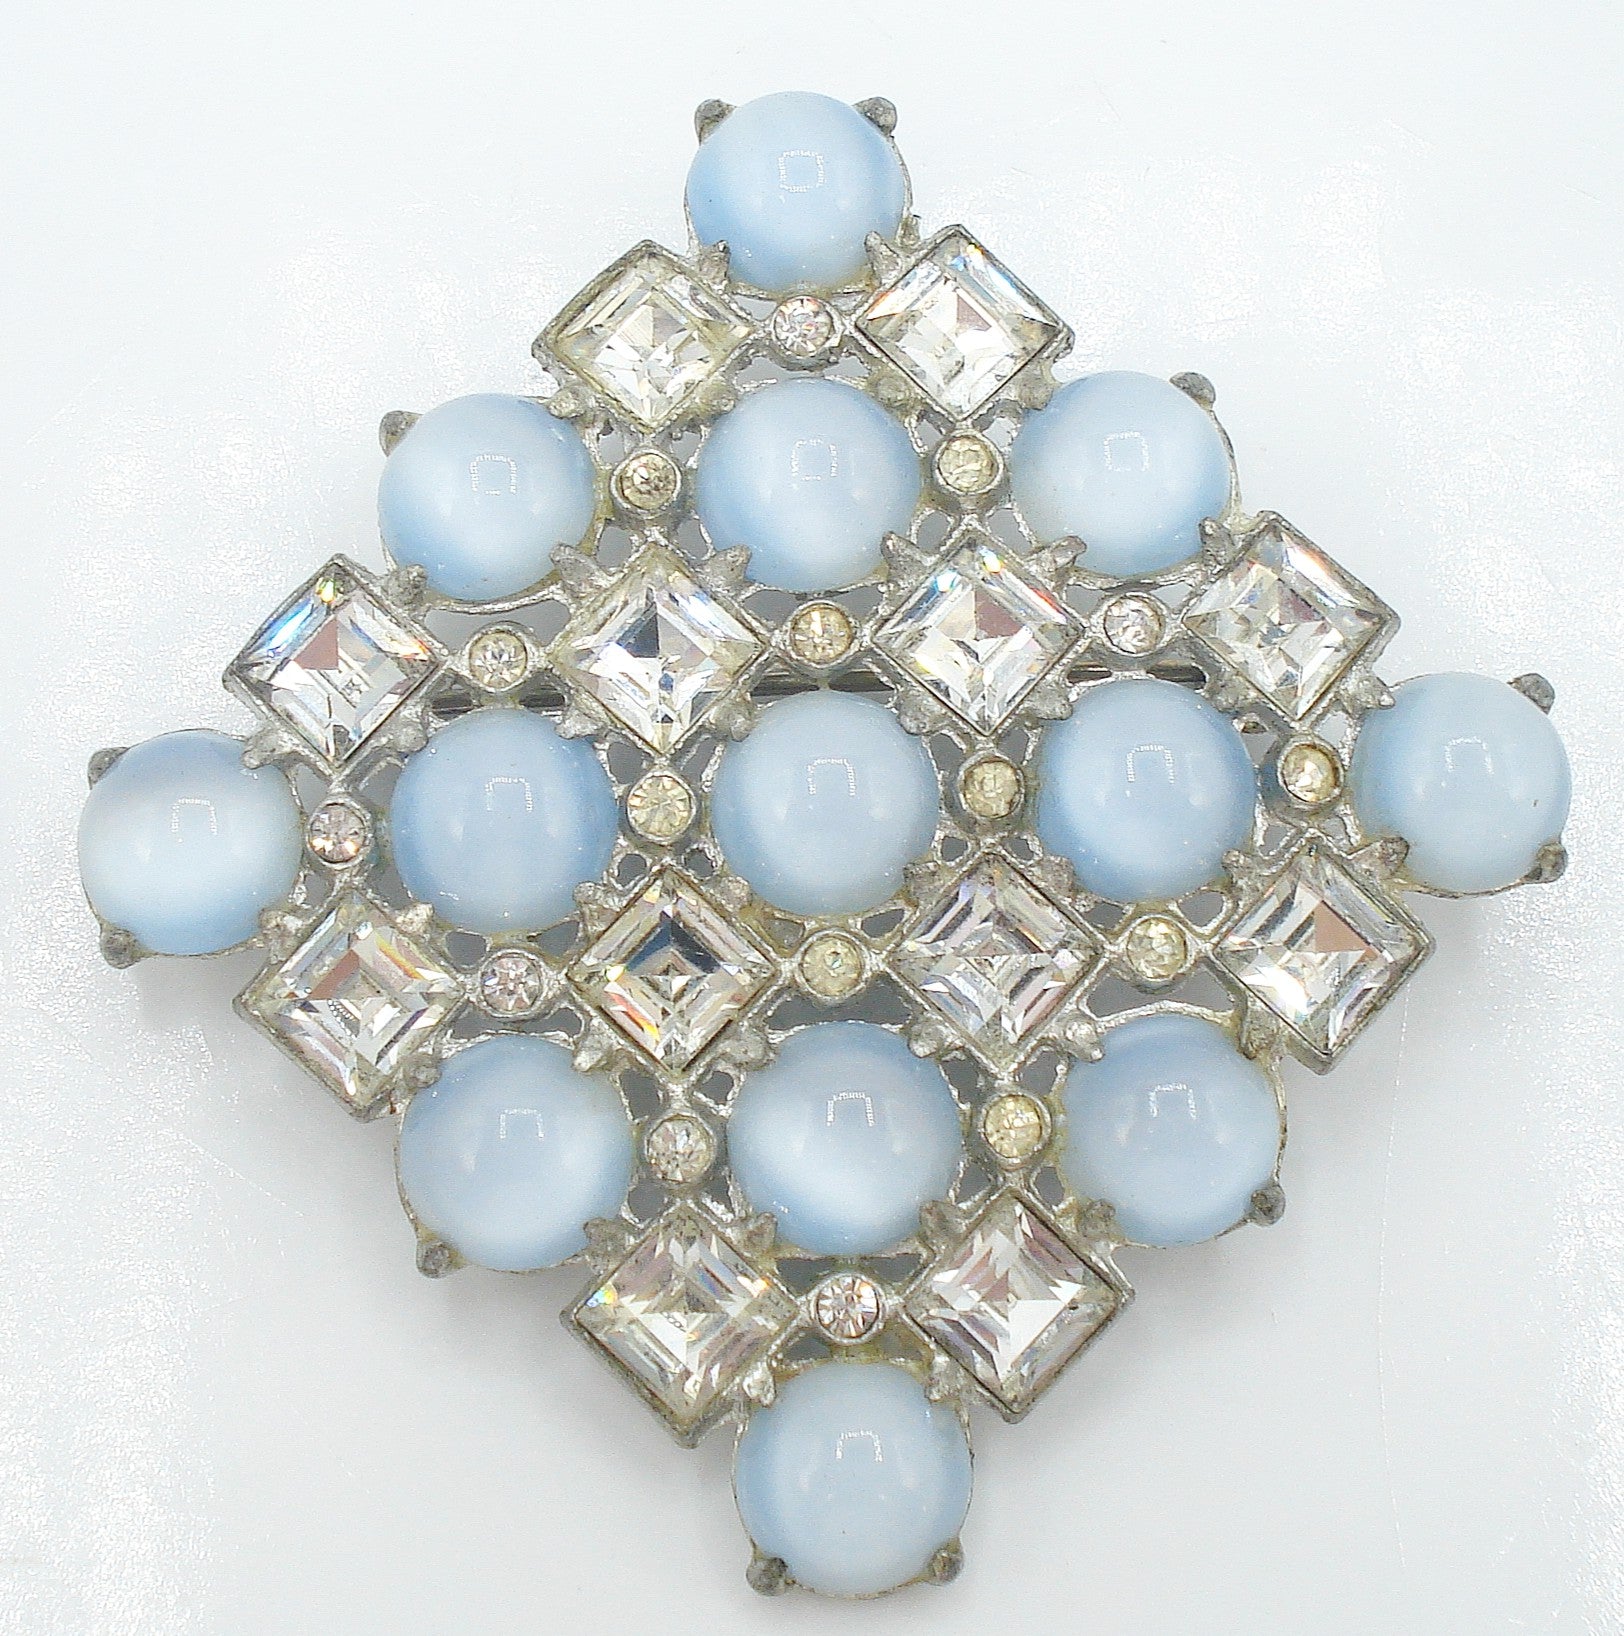 Brooch-2" Square Diamond Shape Crystal Squares Lt Blue Moonstone Cabs